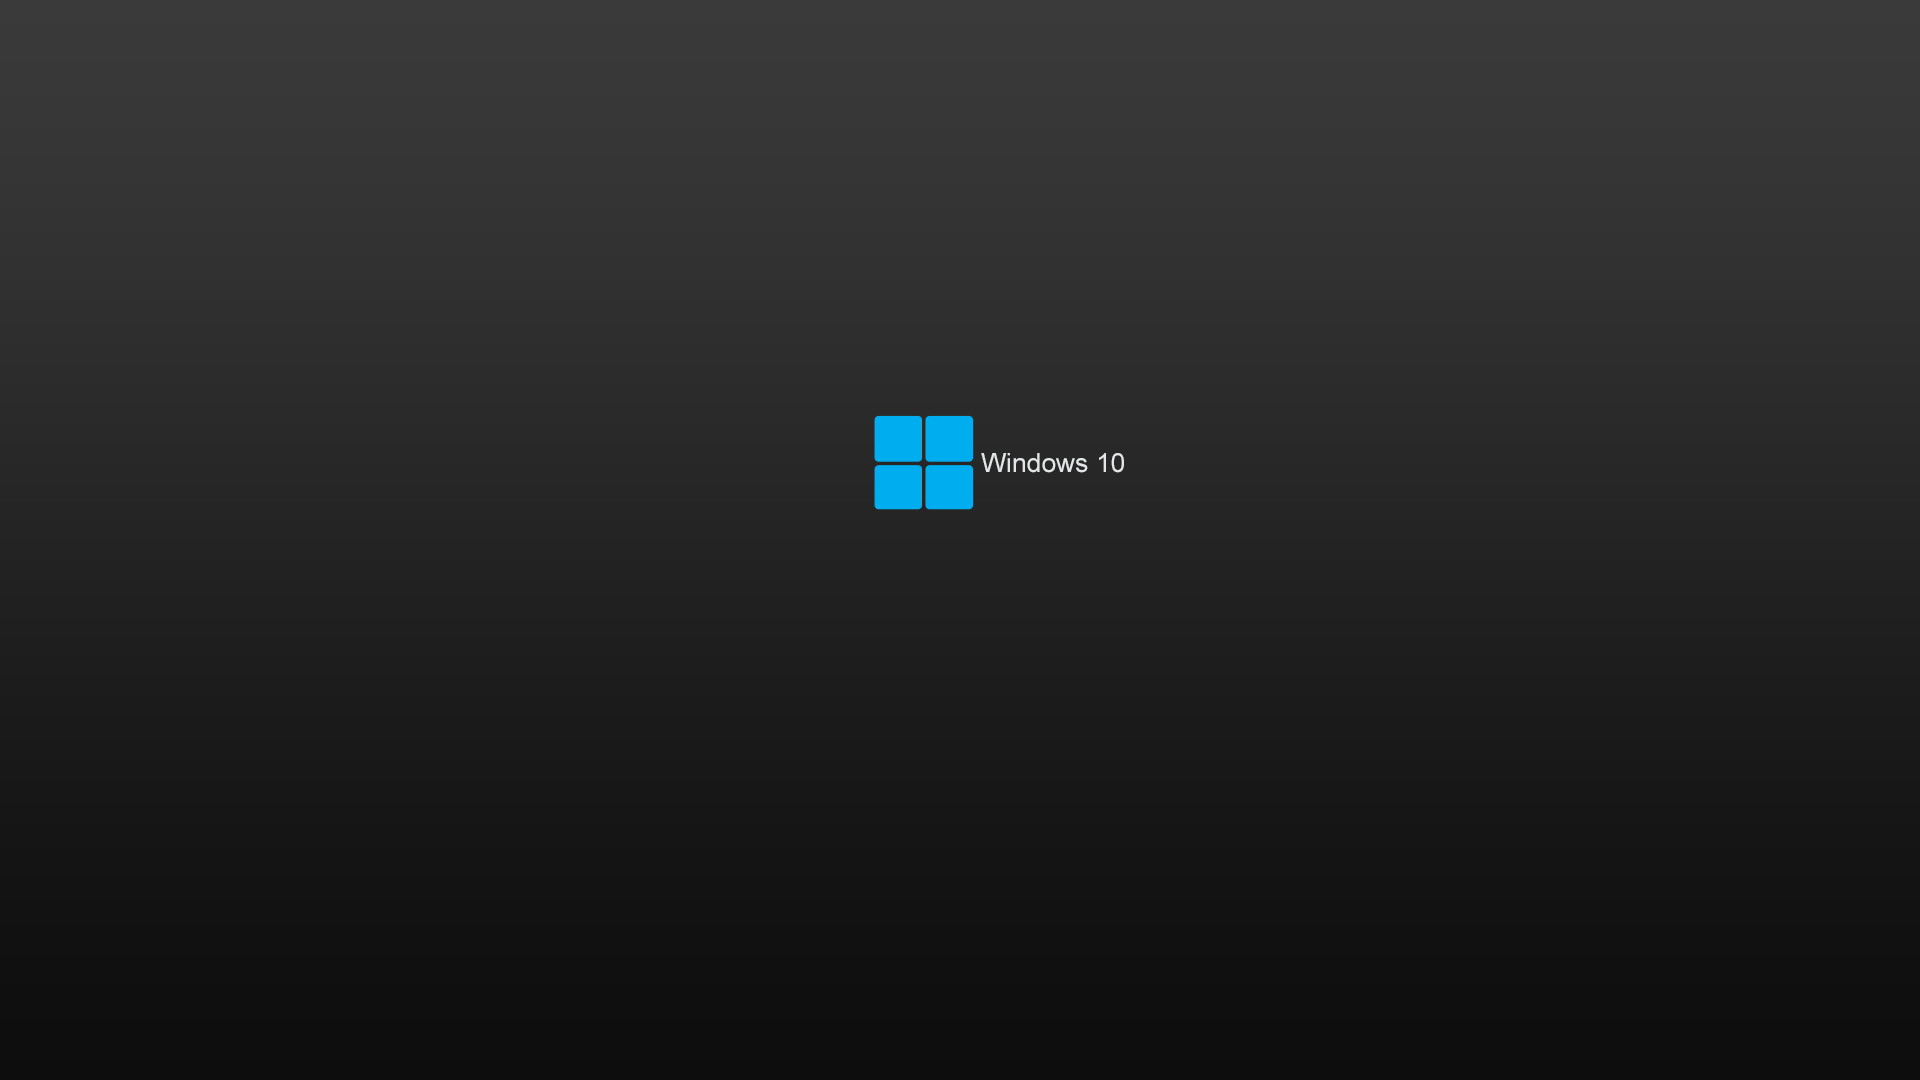 Windows 10 Dark Wallpaper (70+ Images)